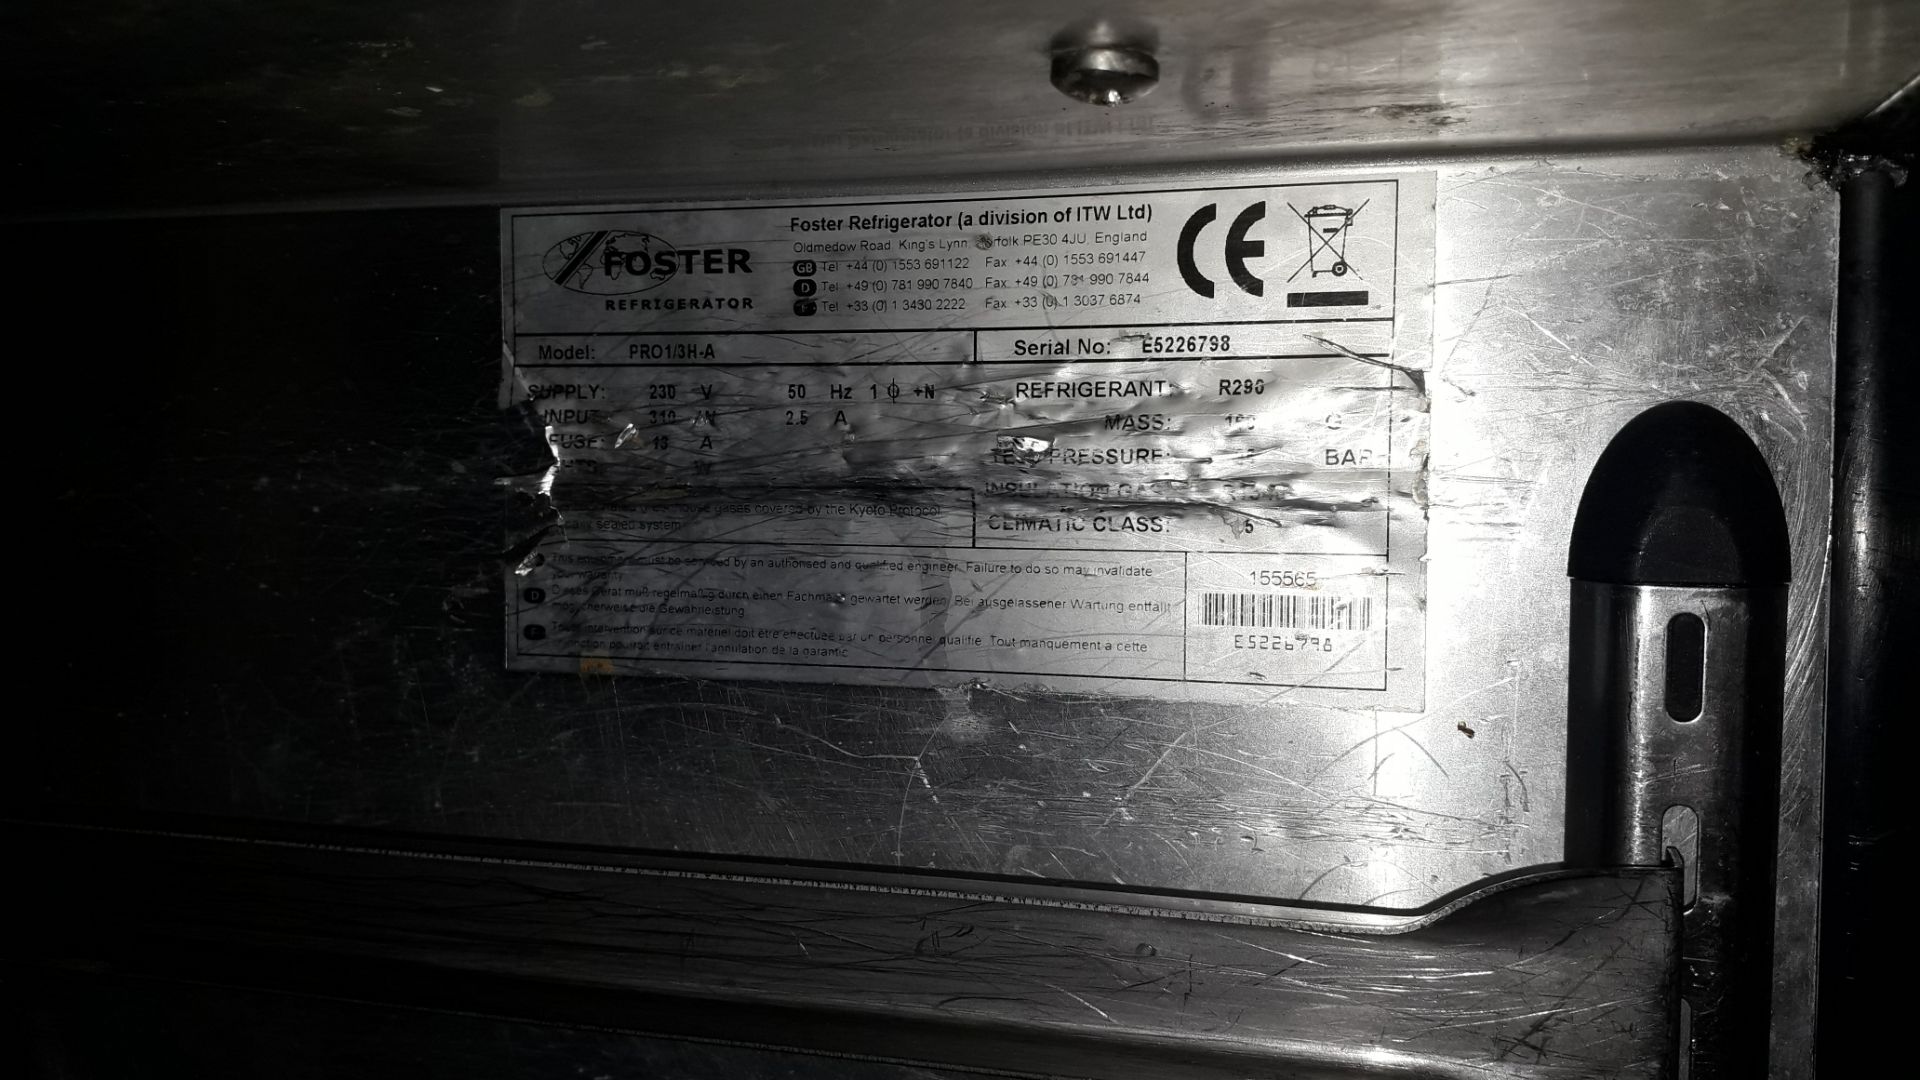 Foster Stainless Steel Triple Door Counter Refrigerator - Image 2 of 2